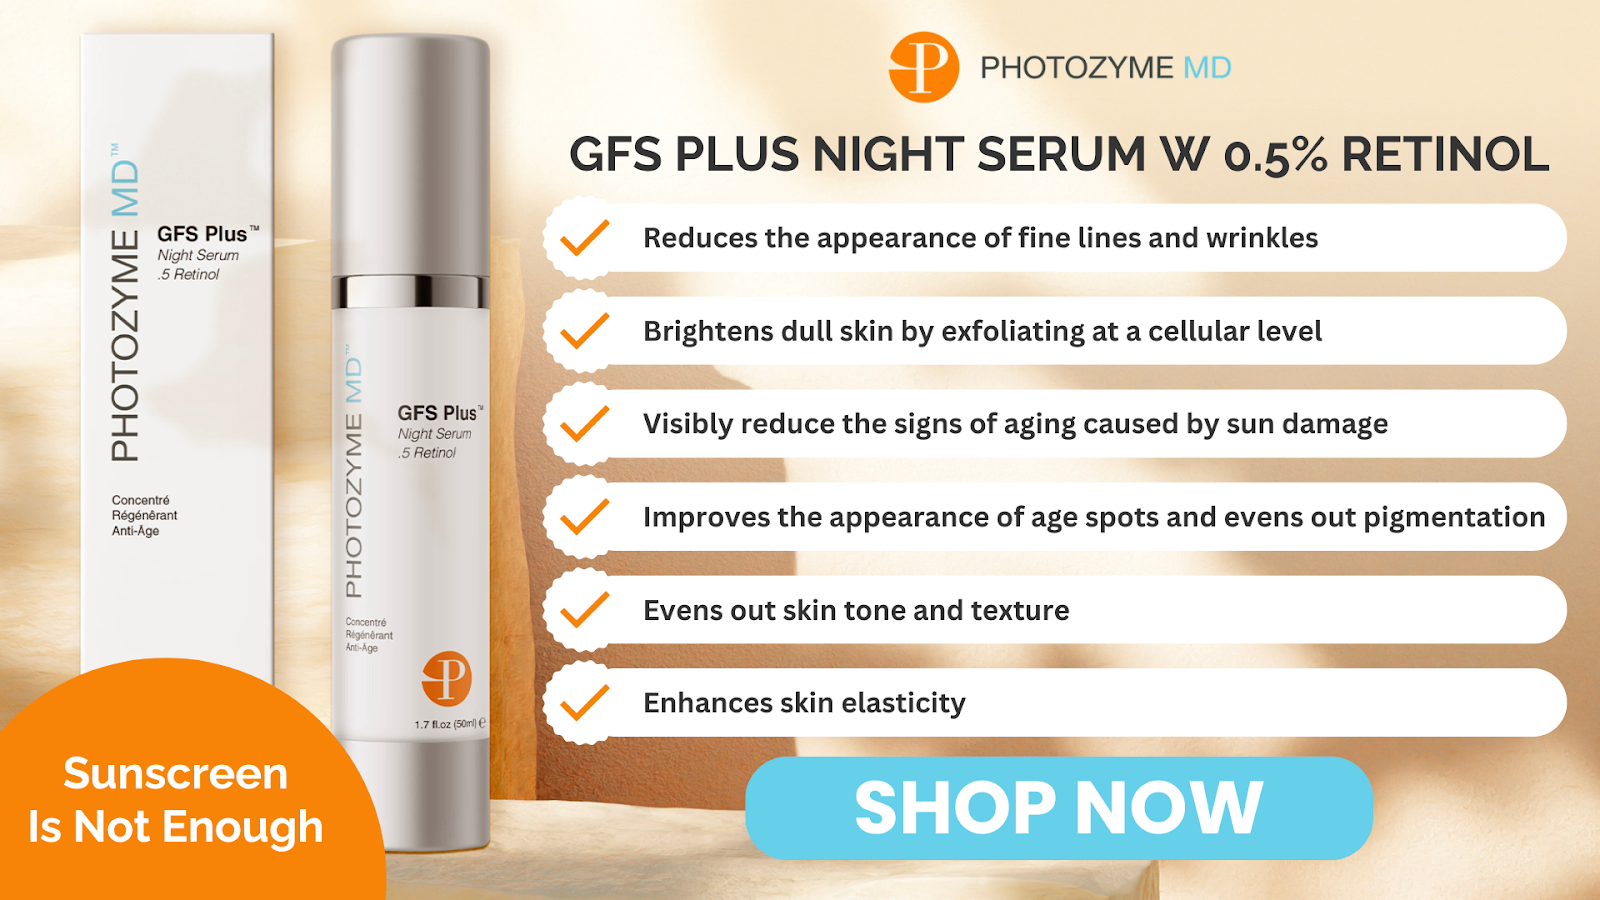 GFS Plus Night Serum w 0.5% Retinol